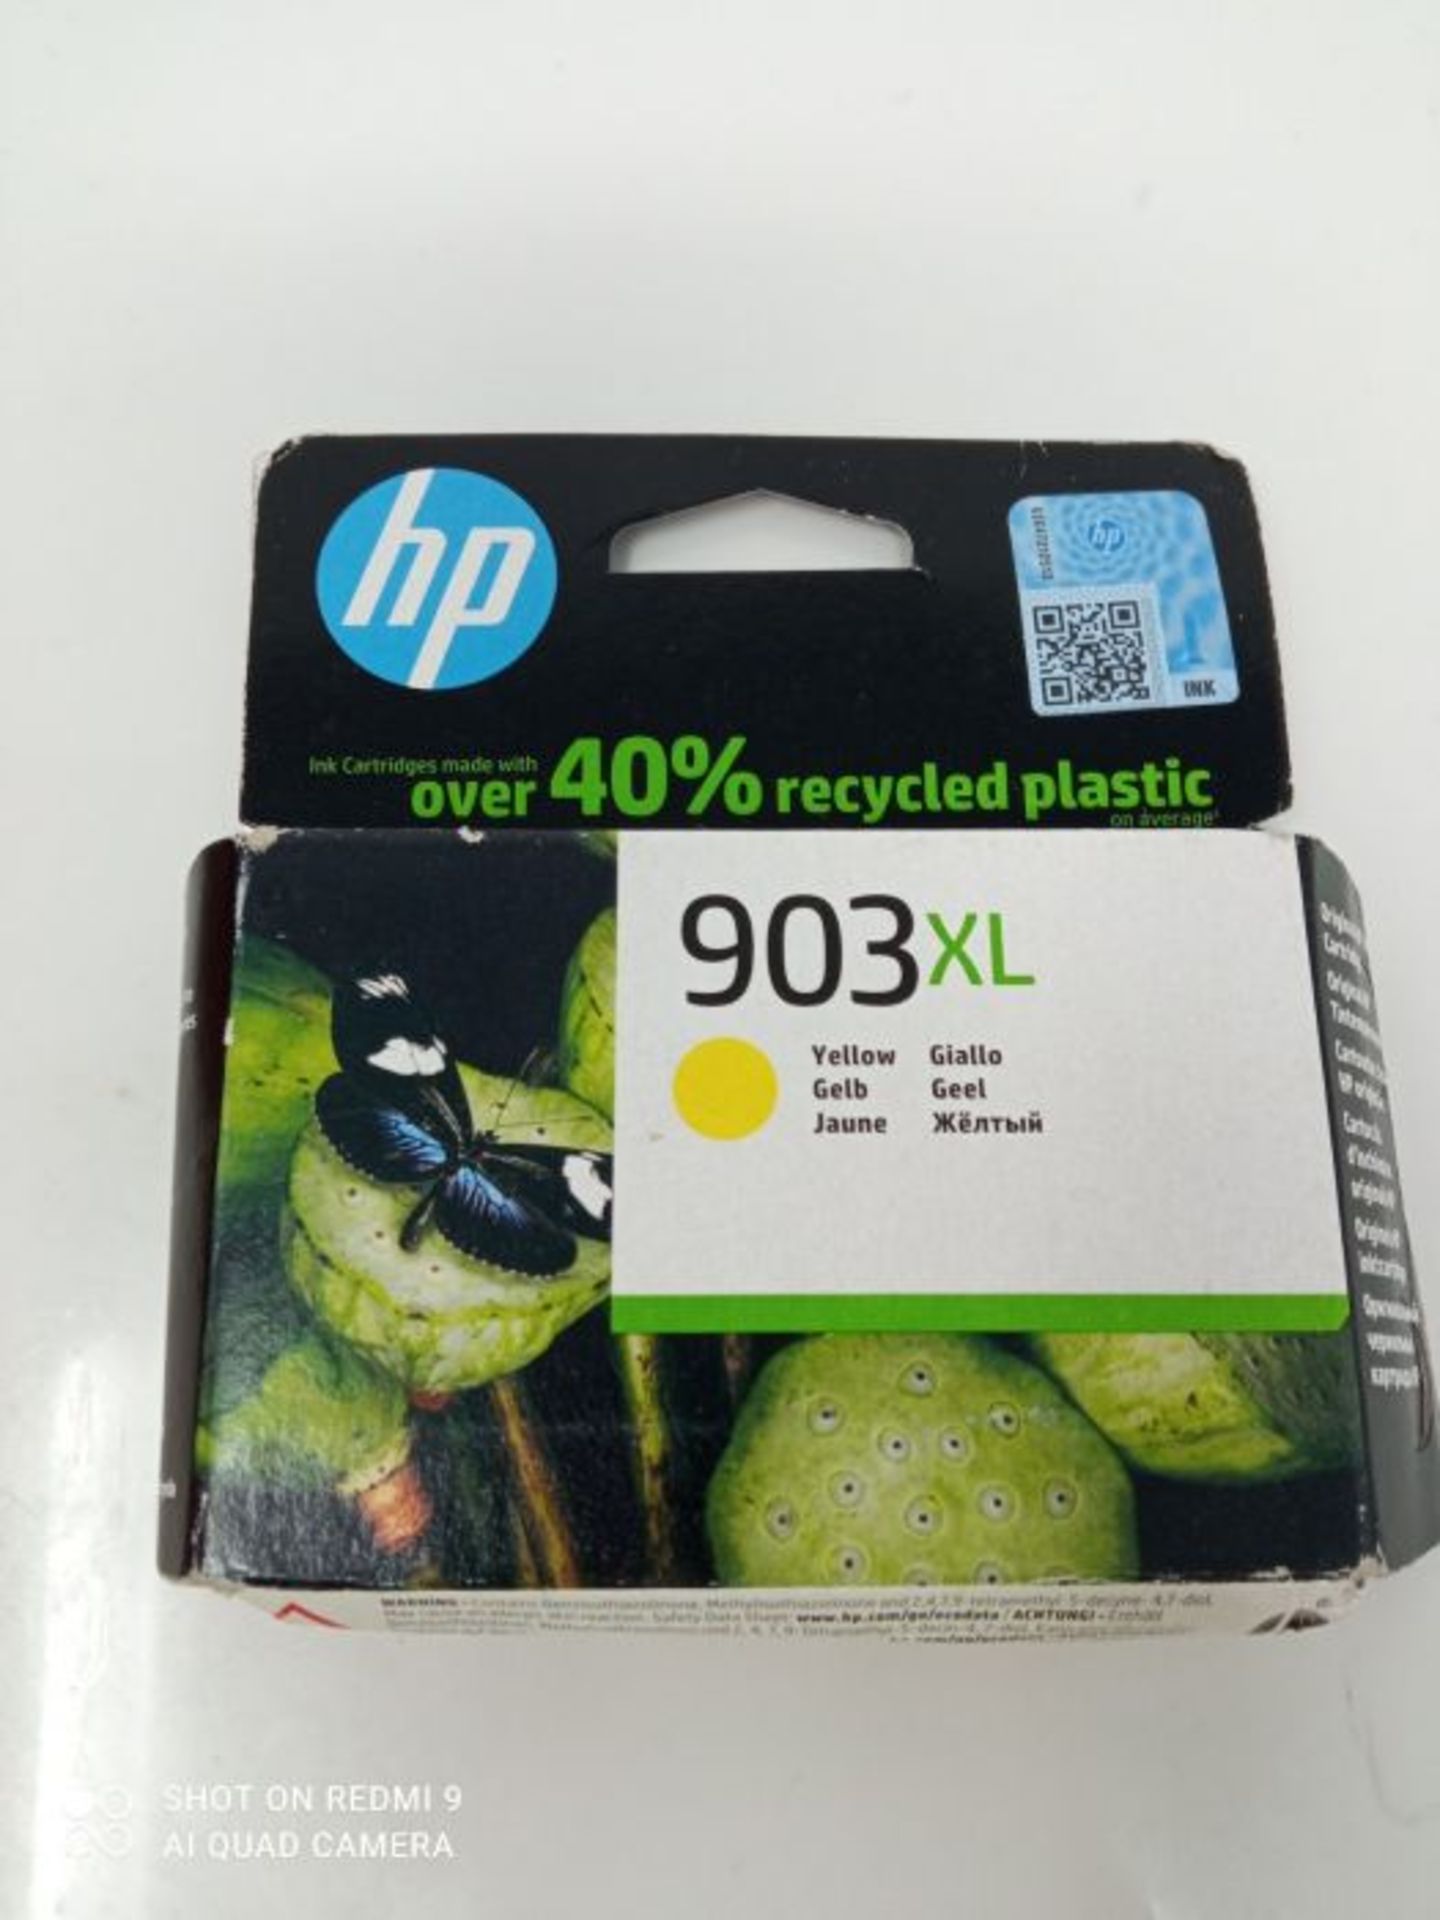 HP T6M11AE 903XL High Yield Original Ink Cartridge, Yellow, Single Pack - Image 2 of 2